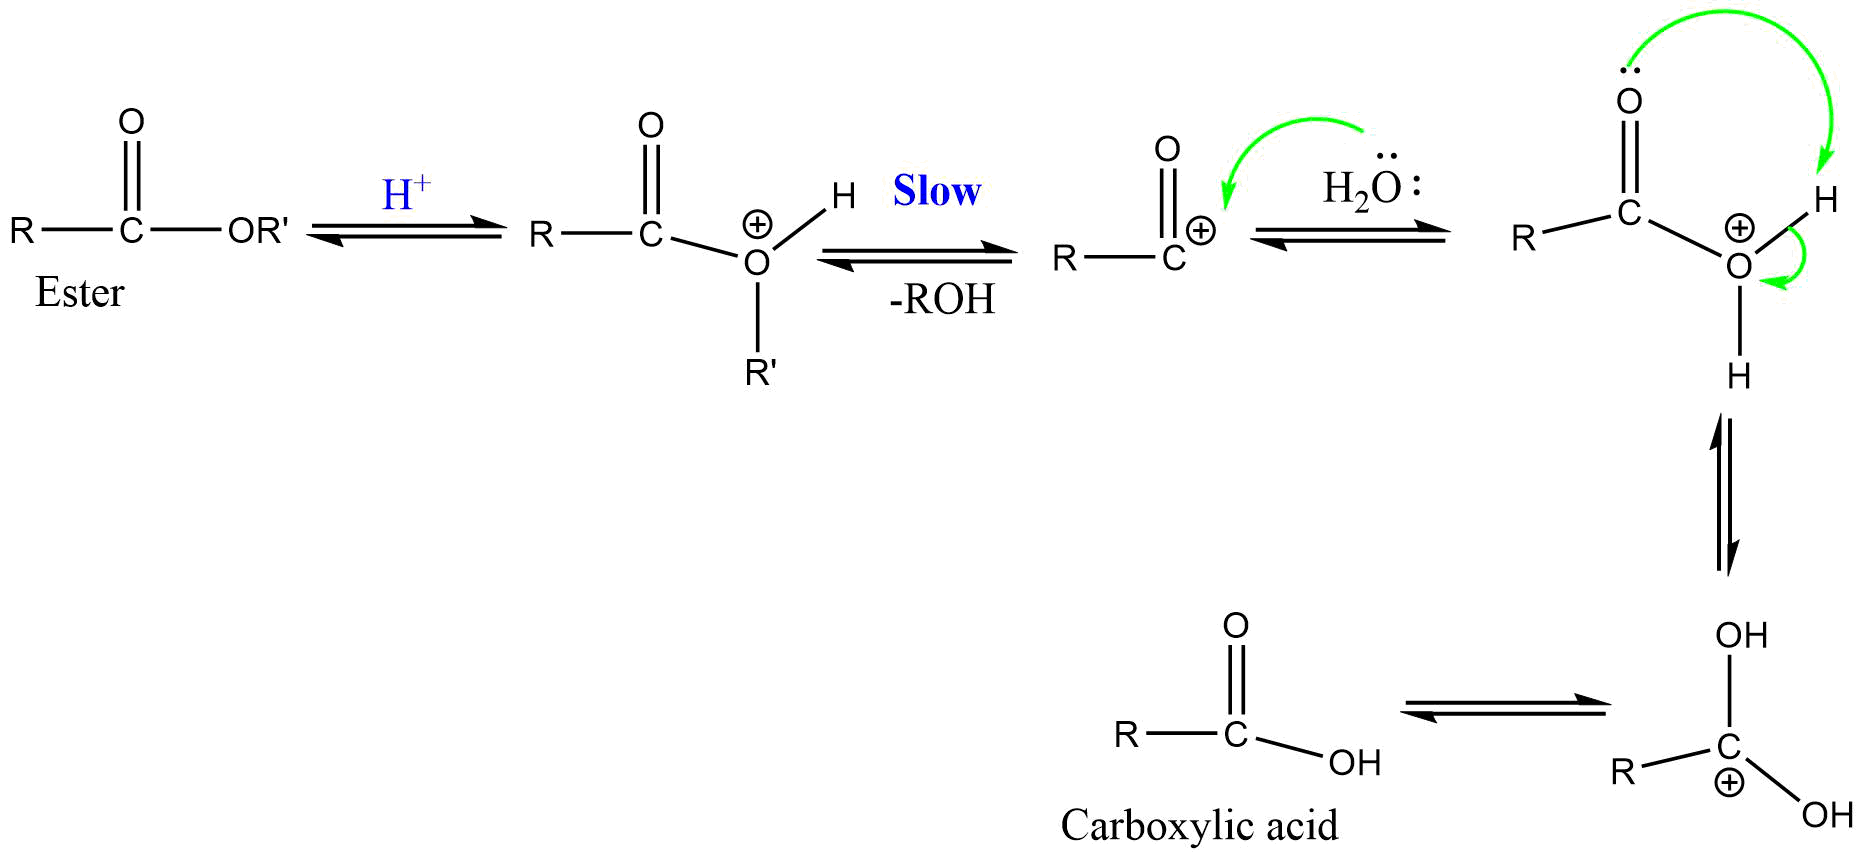 AAC1 (Acid catalyzed acyl bond cleavage unimolecular reaction)